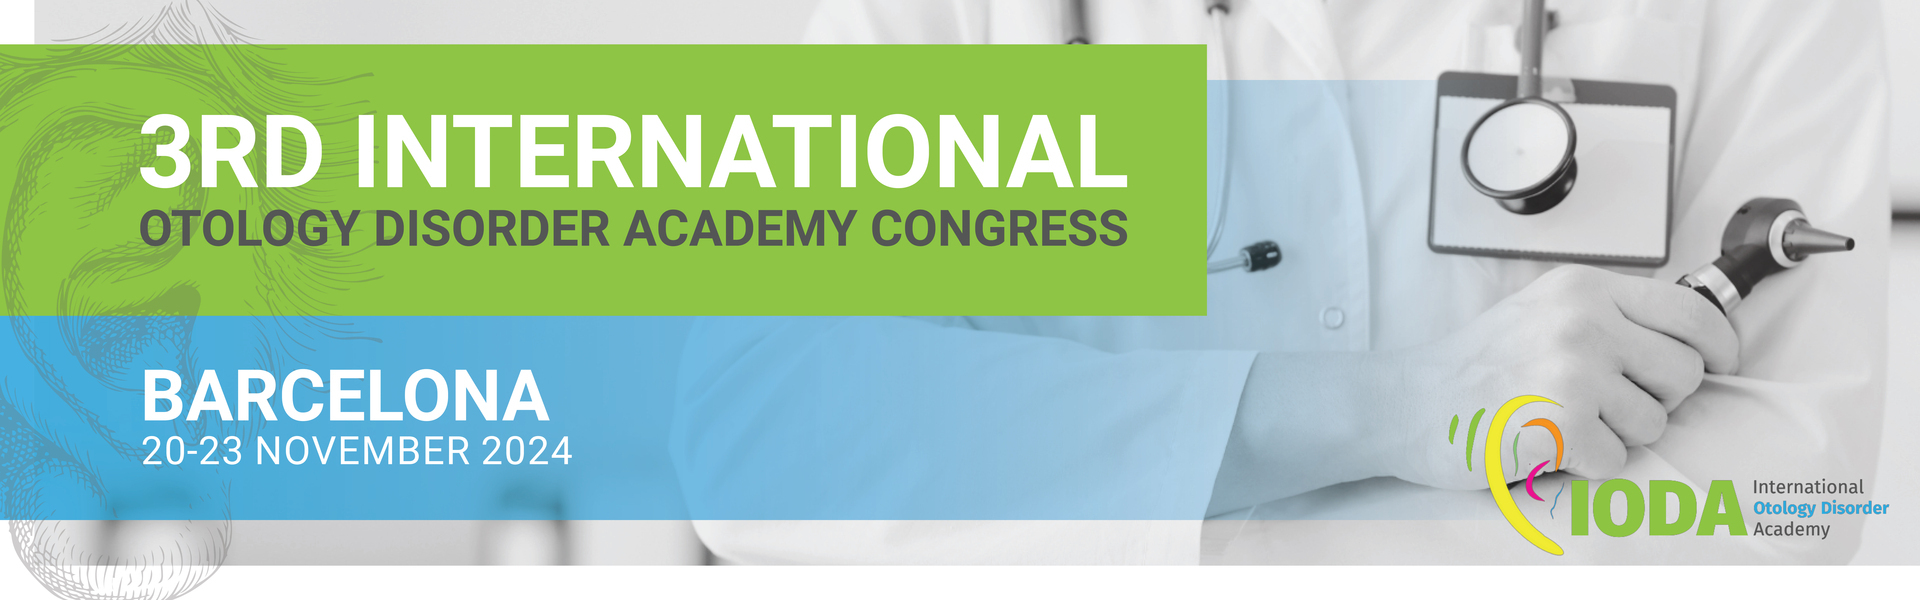 IODA2024 - 3rd International Otology Disorder Academy Congress, Barcelona, Catalunya, Spain